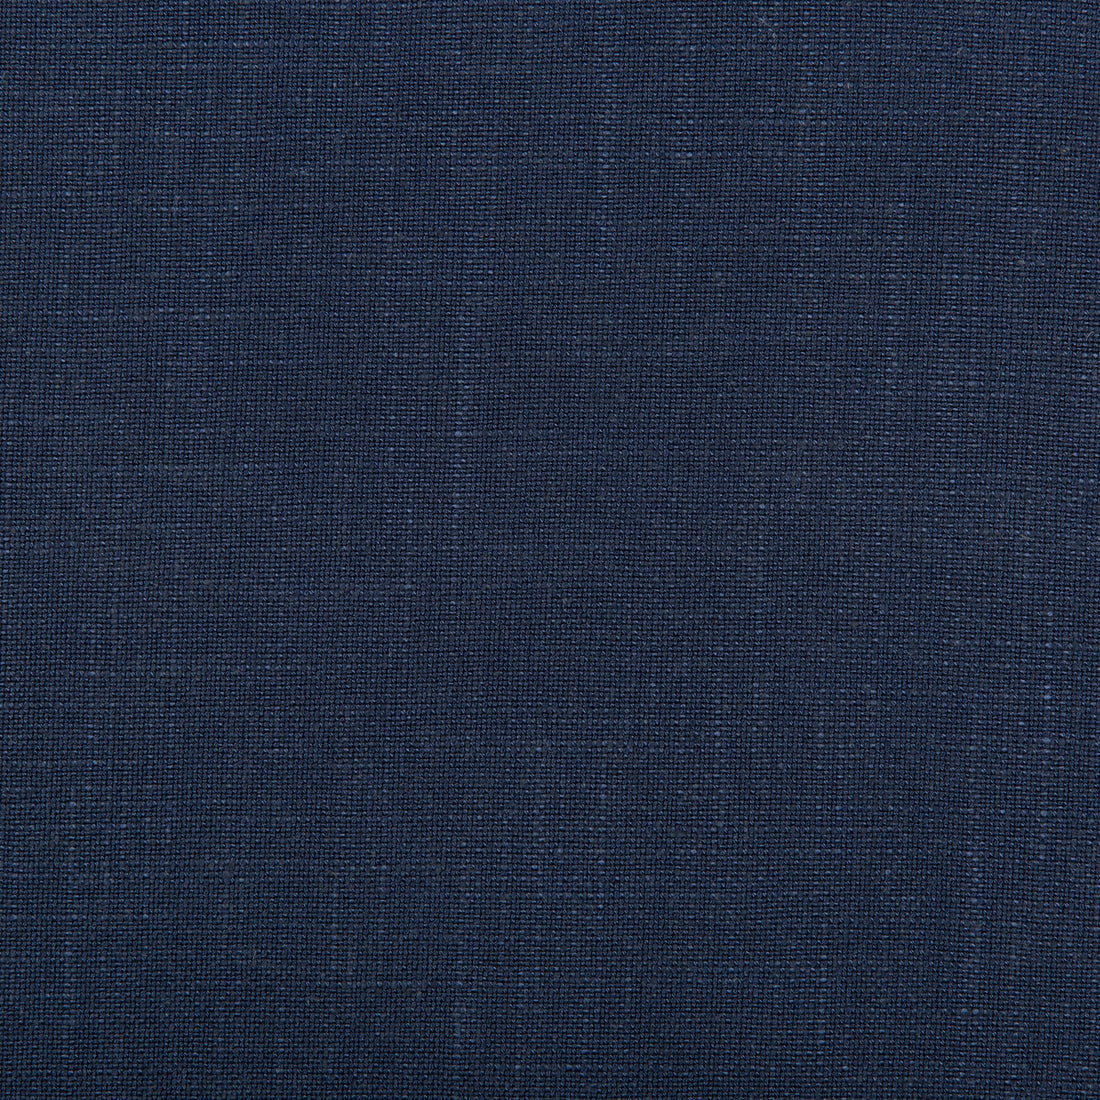 Aura fabric in lapis color - pattern 35520.55.0 - by Kravet Design